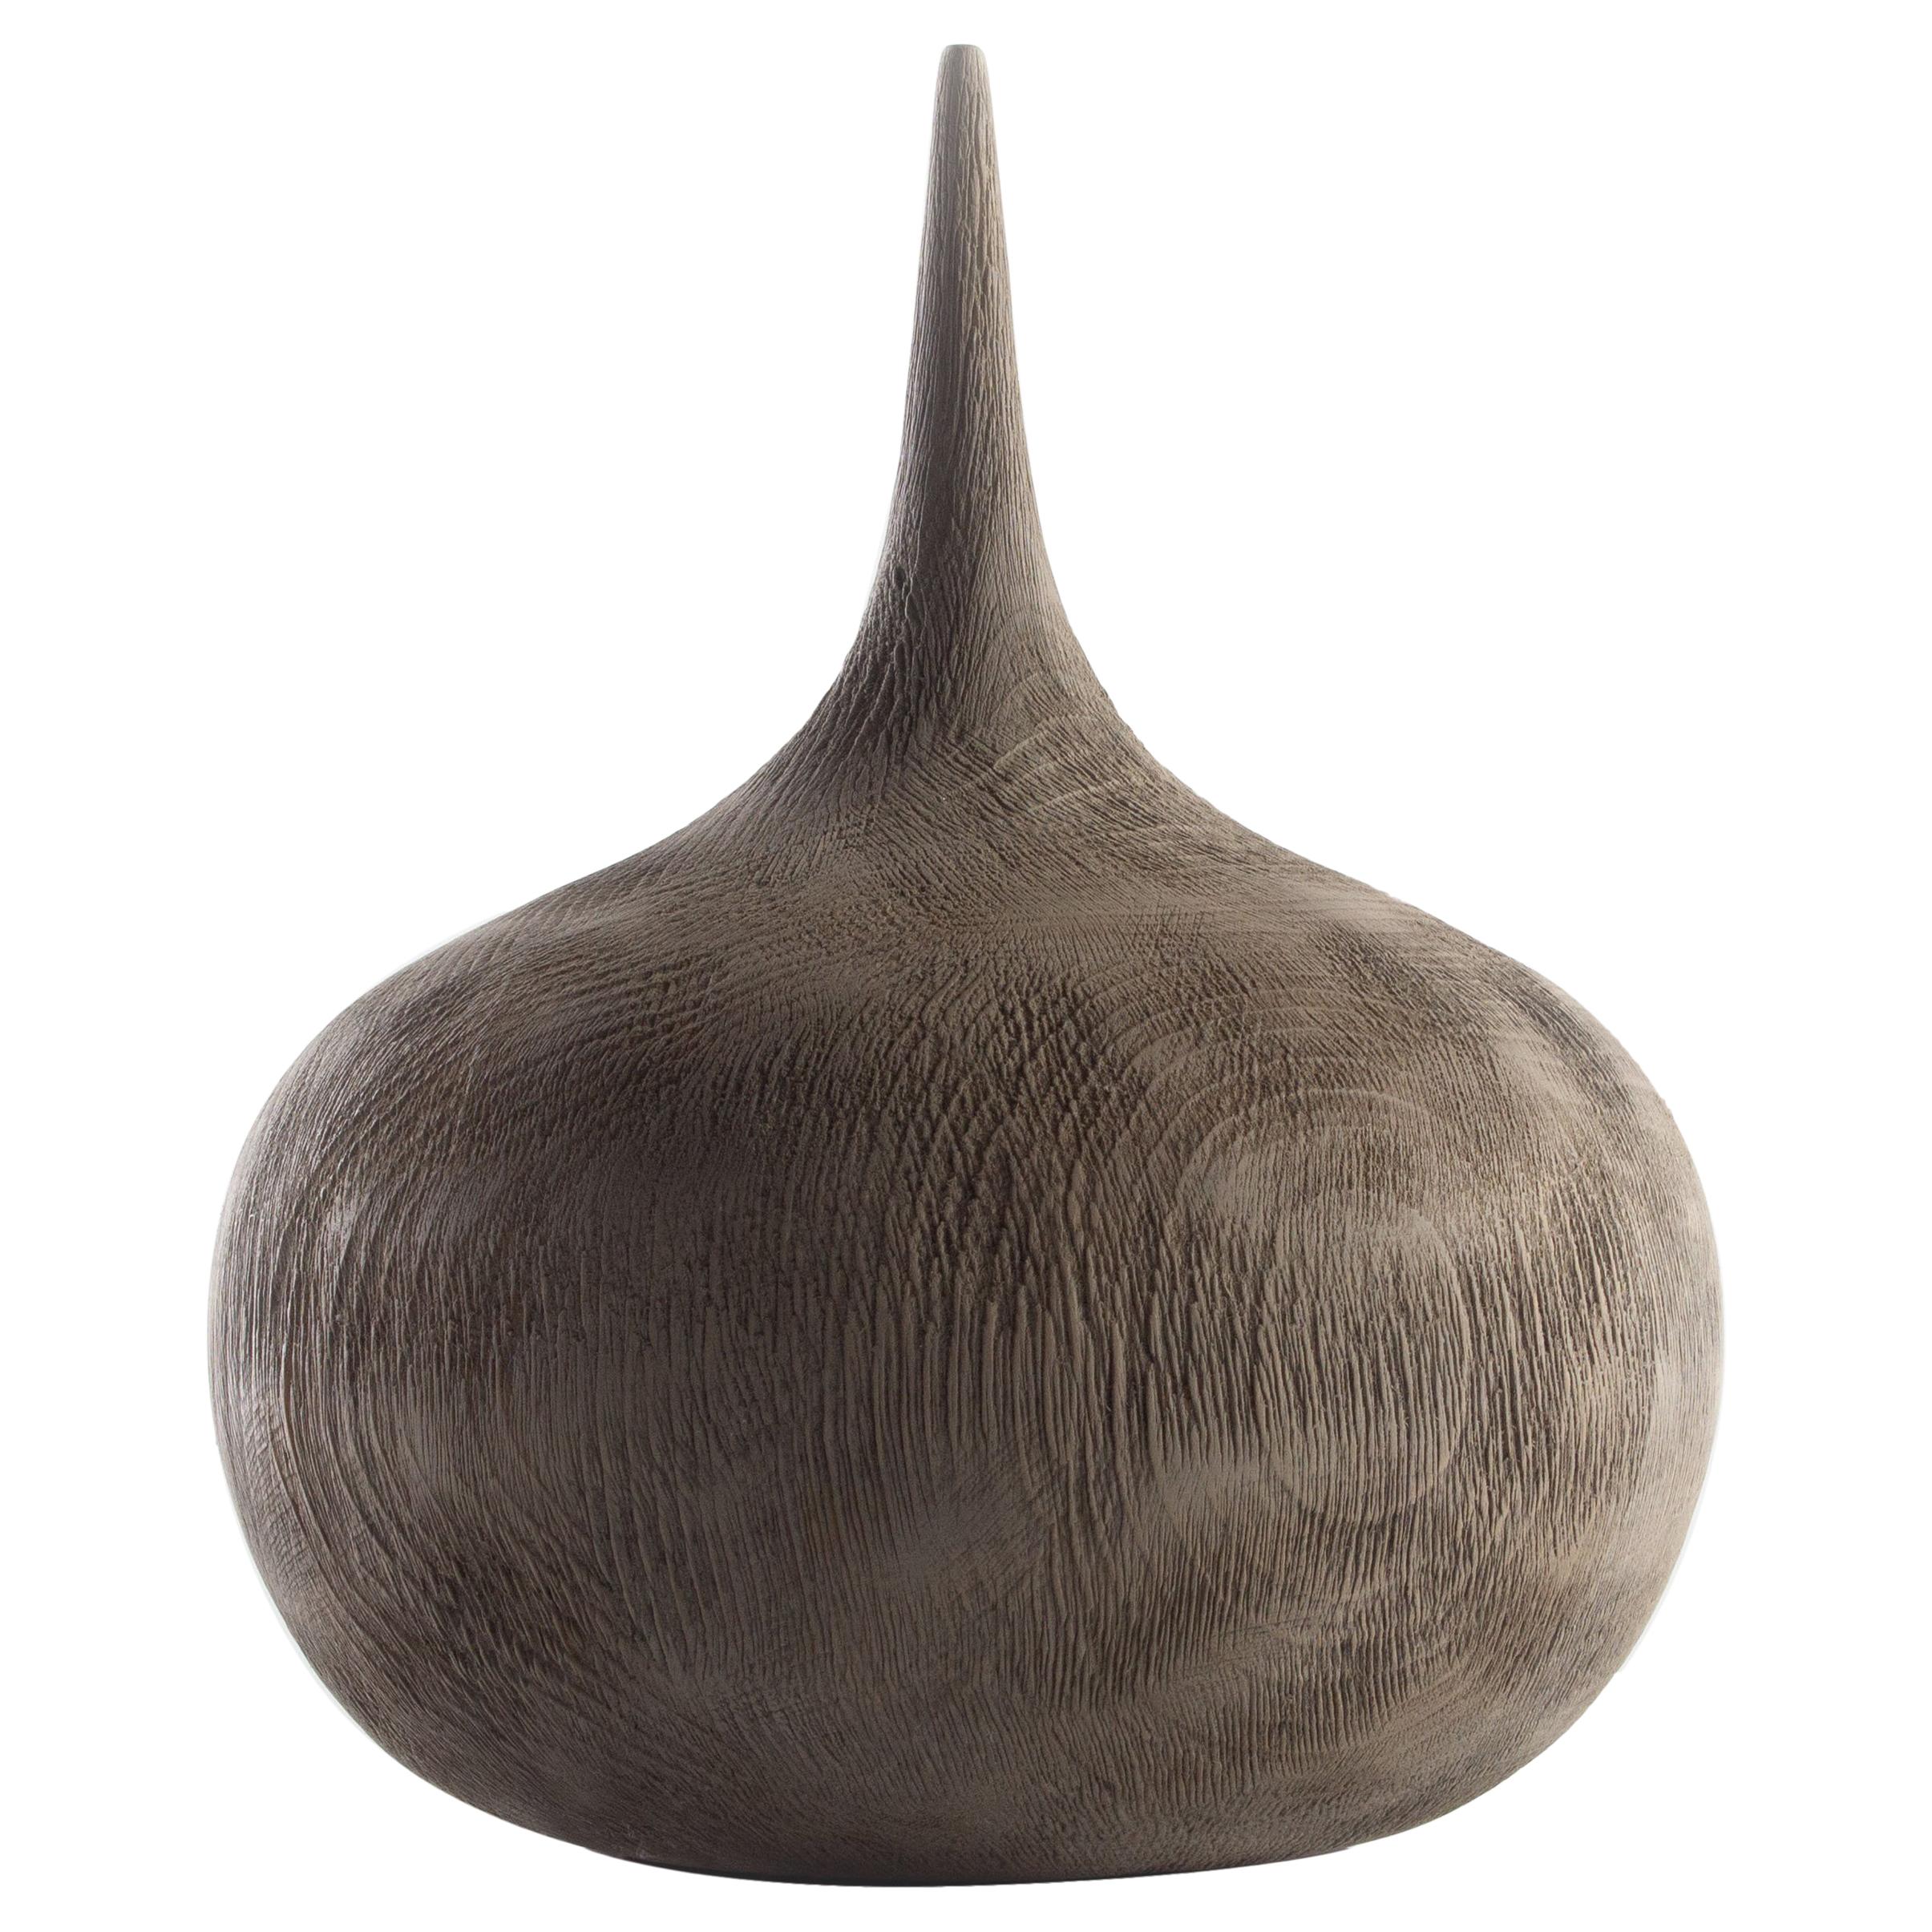 Hand Carved Oak Stylized Onion Form